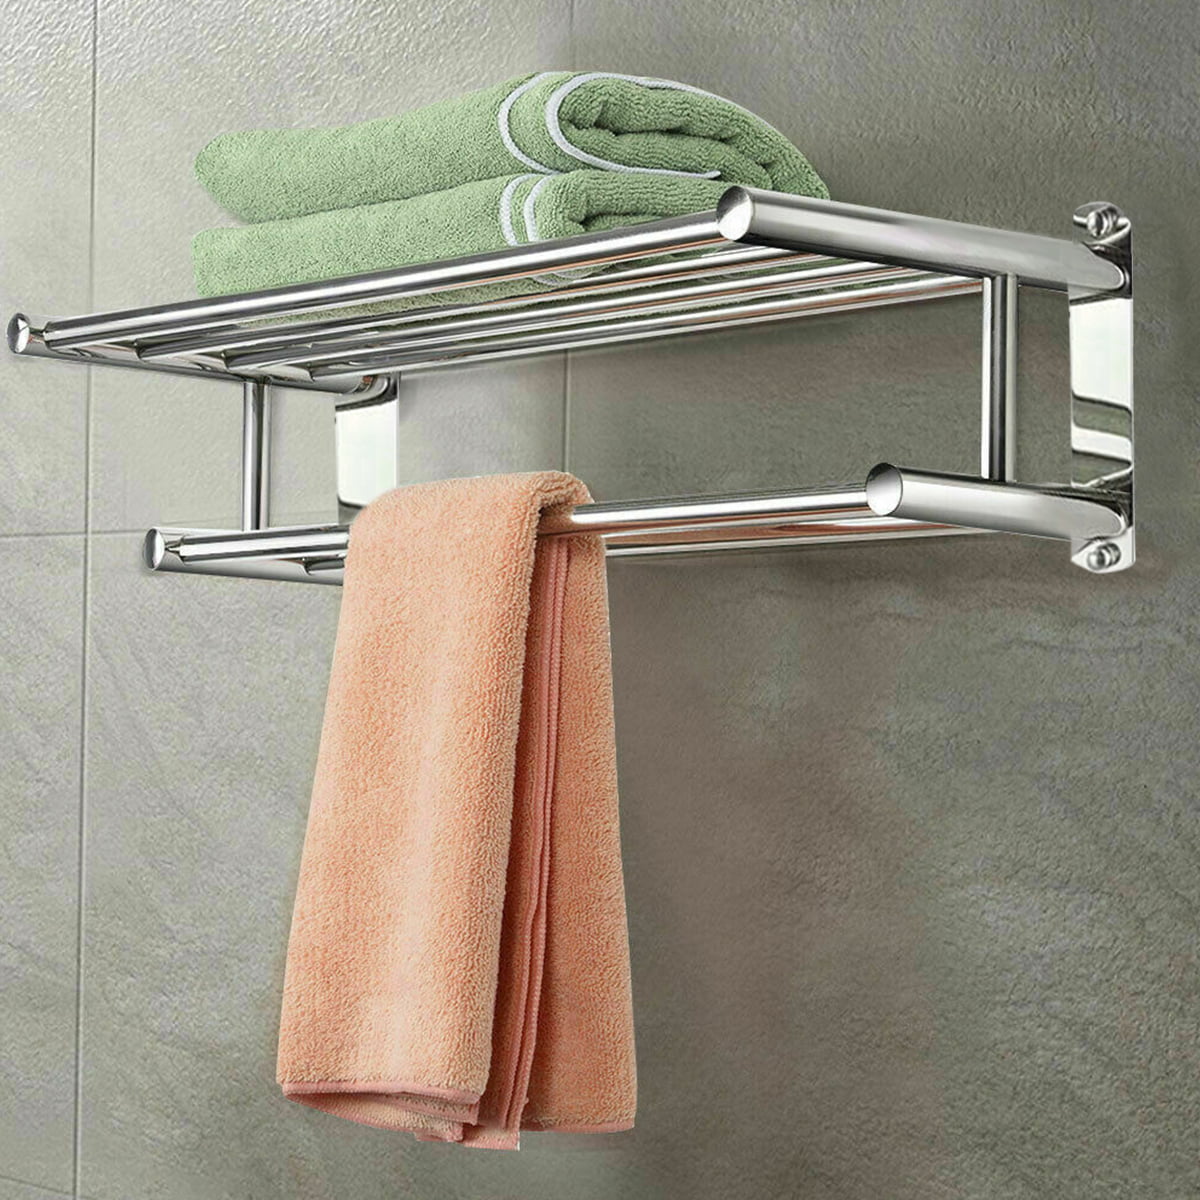 Towel Rail Rack Storage Shelf Bar Stainless Steel Wall Mounted Bathroom Hotel US 